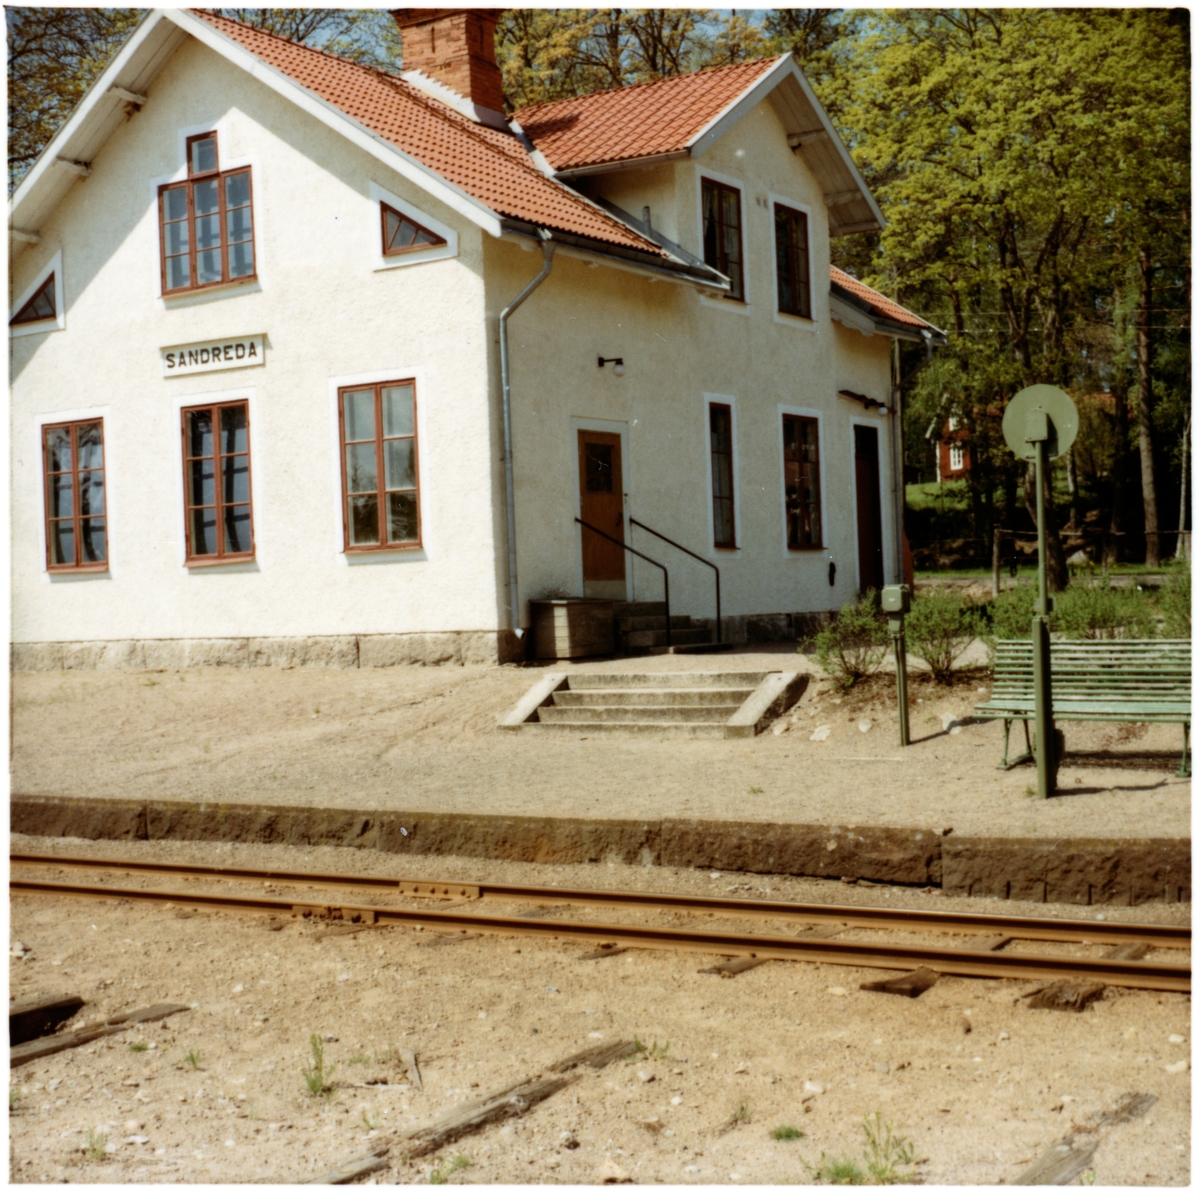 Sandreda station